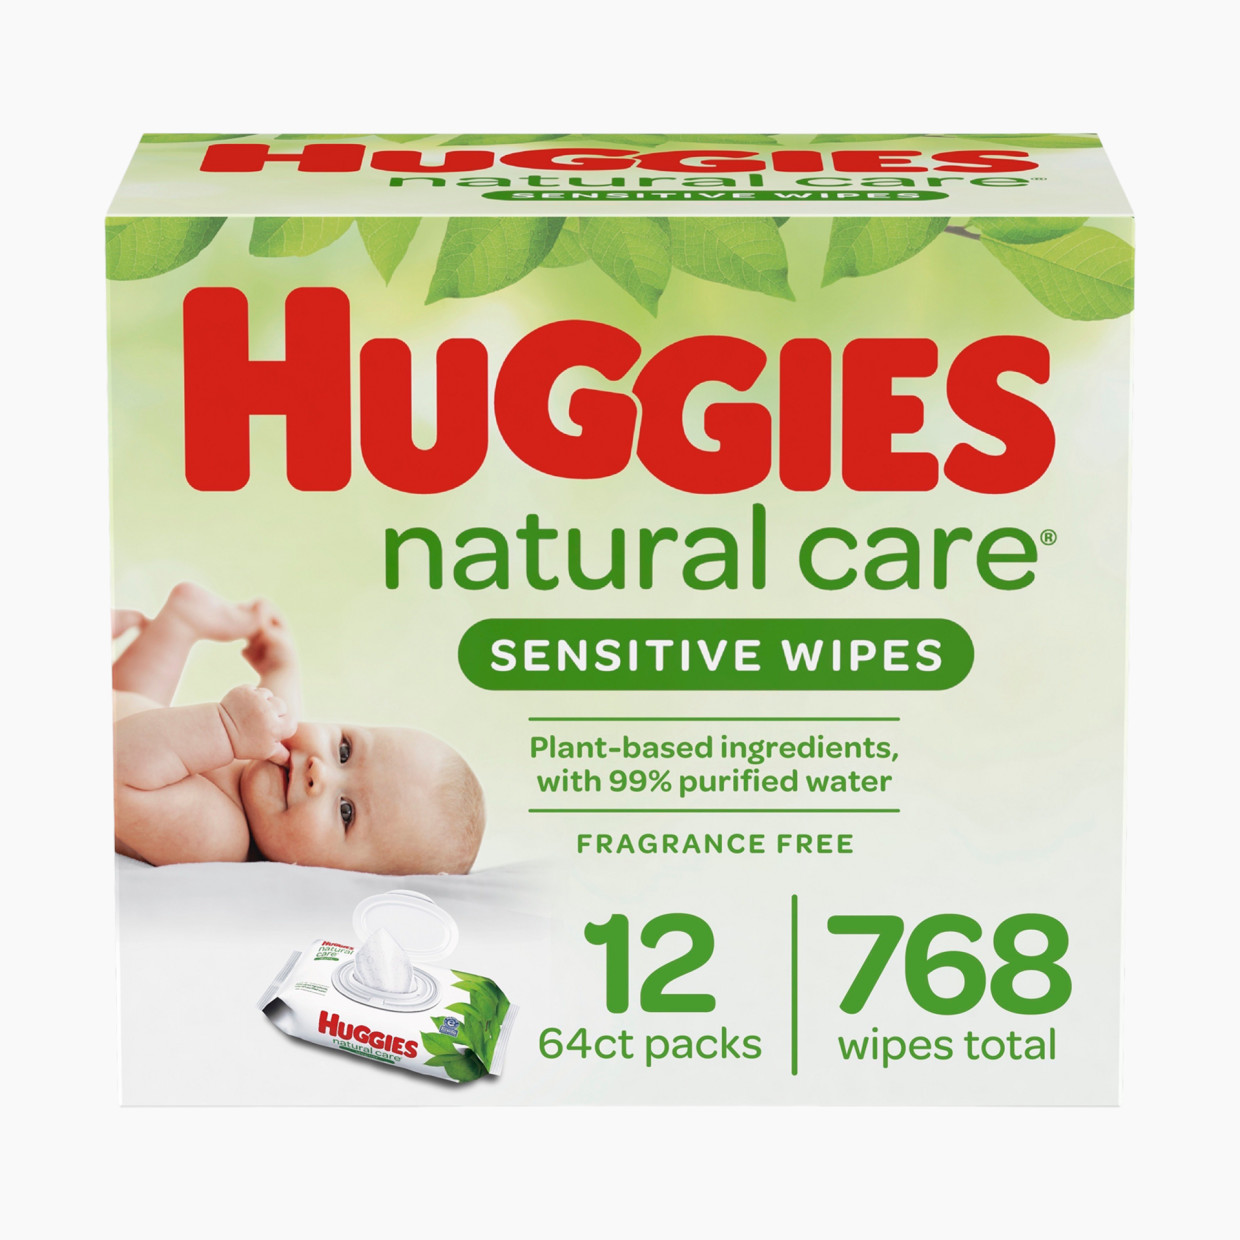 Huggies Natural Care Sensitive Wipes - 768 Count.